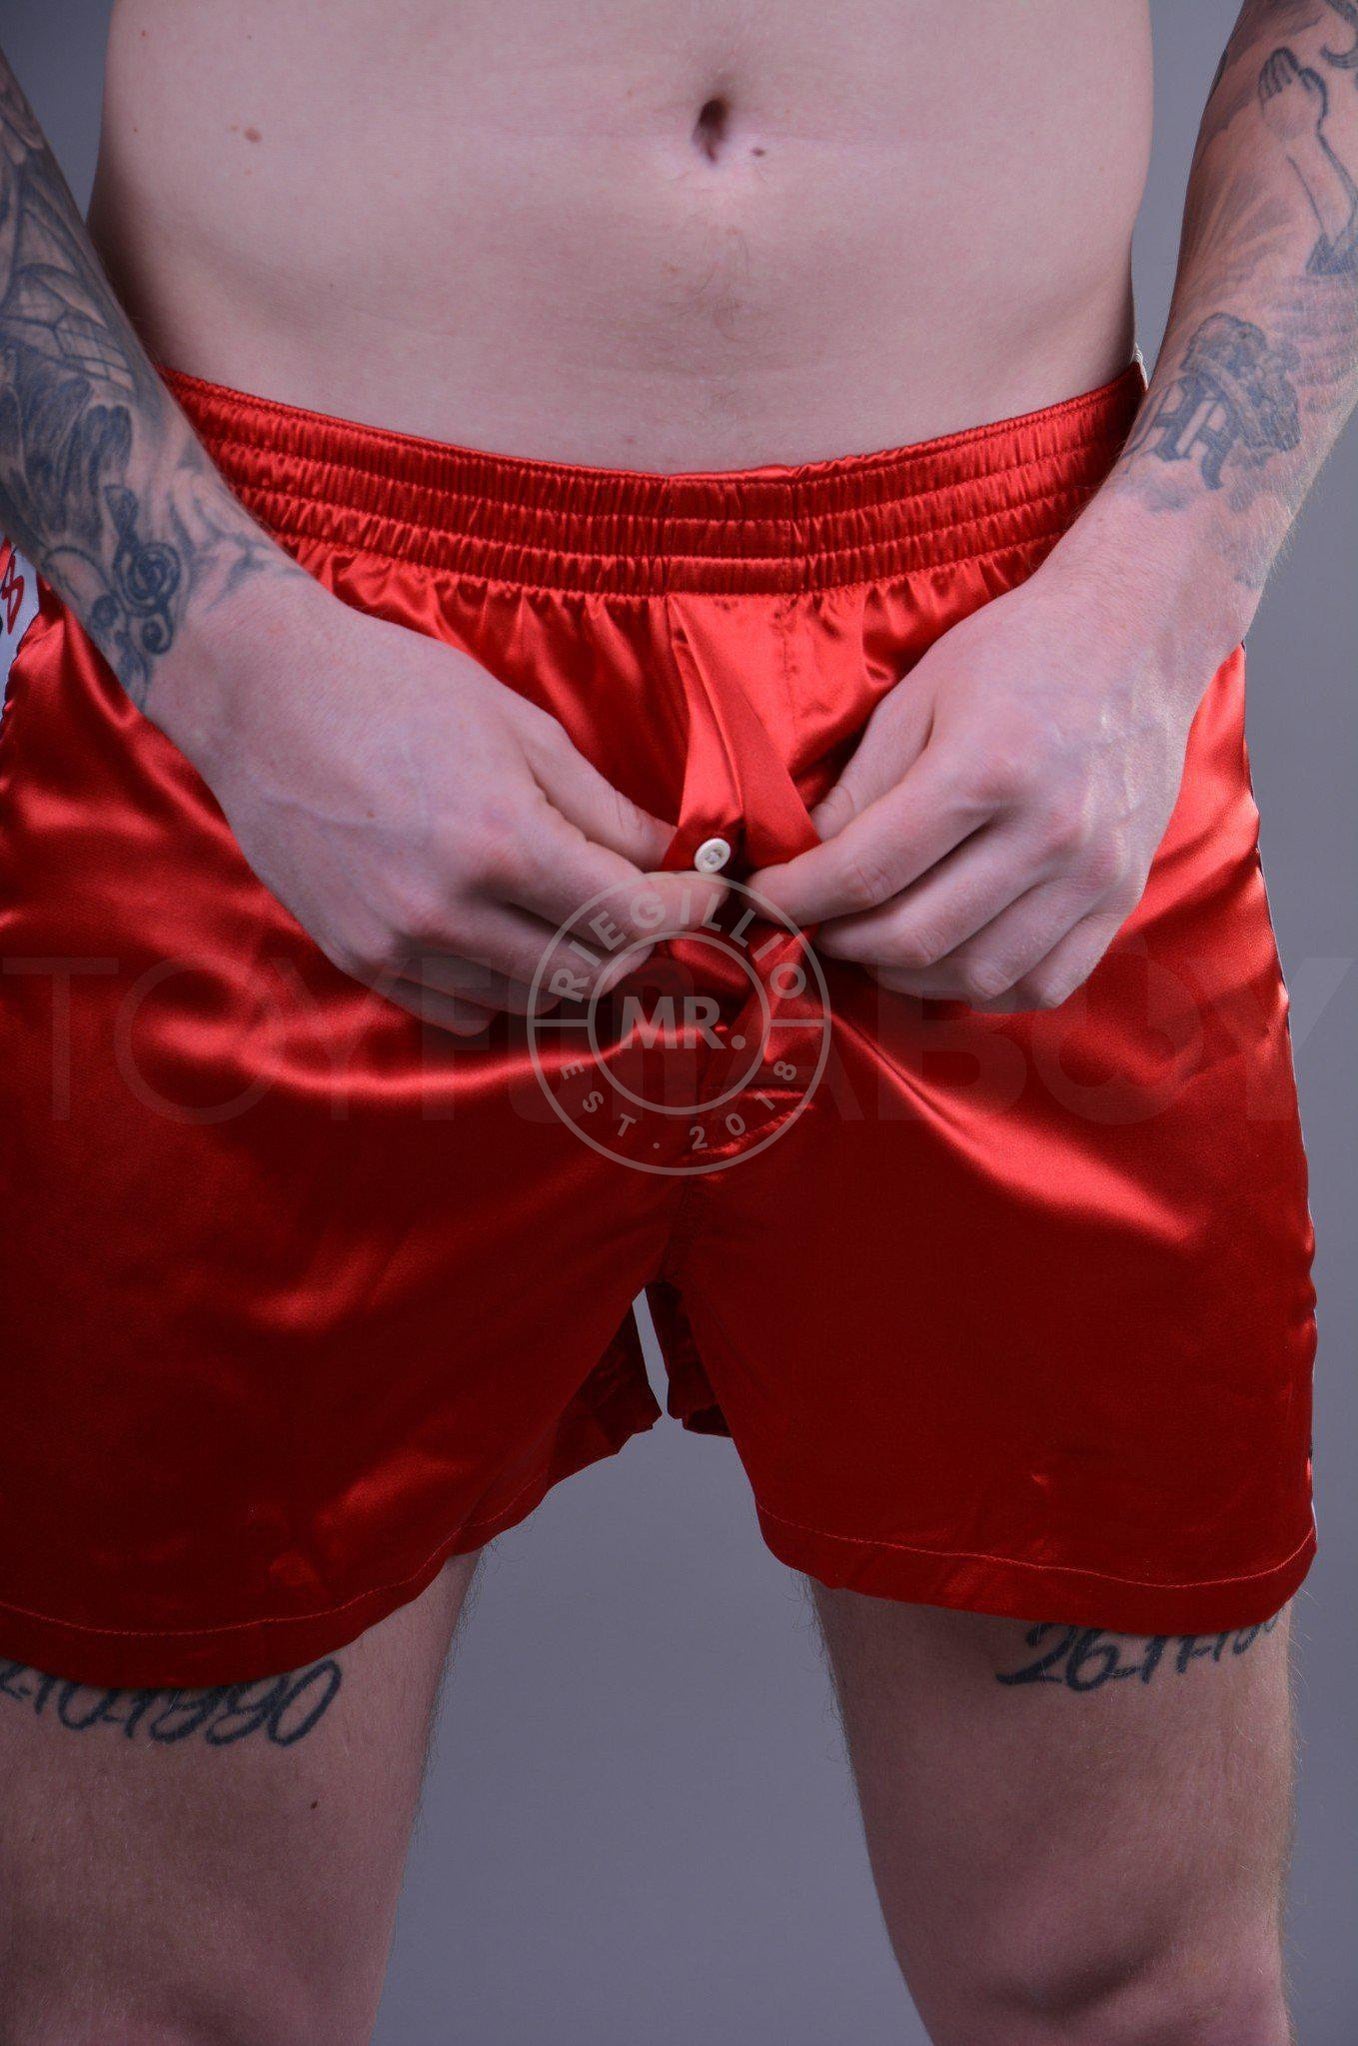 Sk8erboy Shiny Boxershort - Red at MR. Riegillio